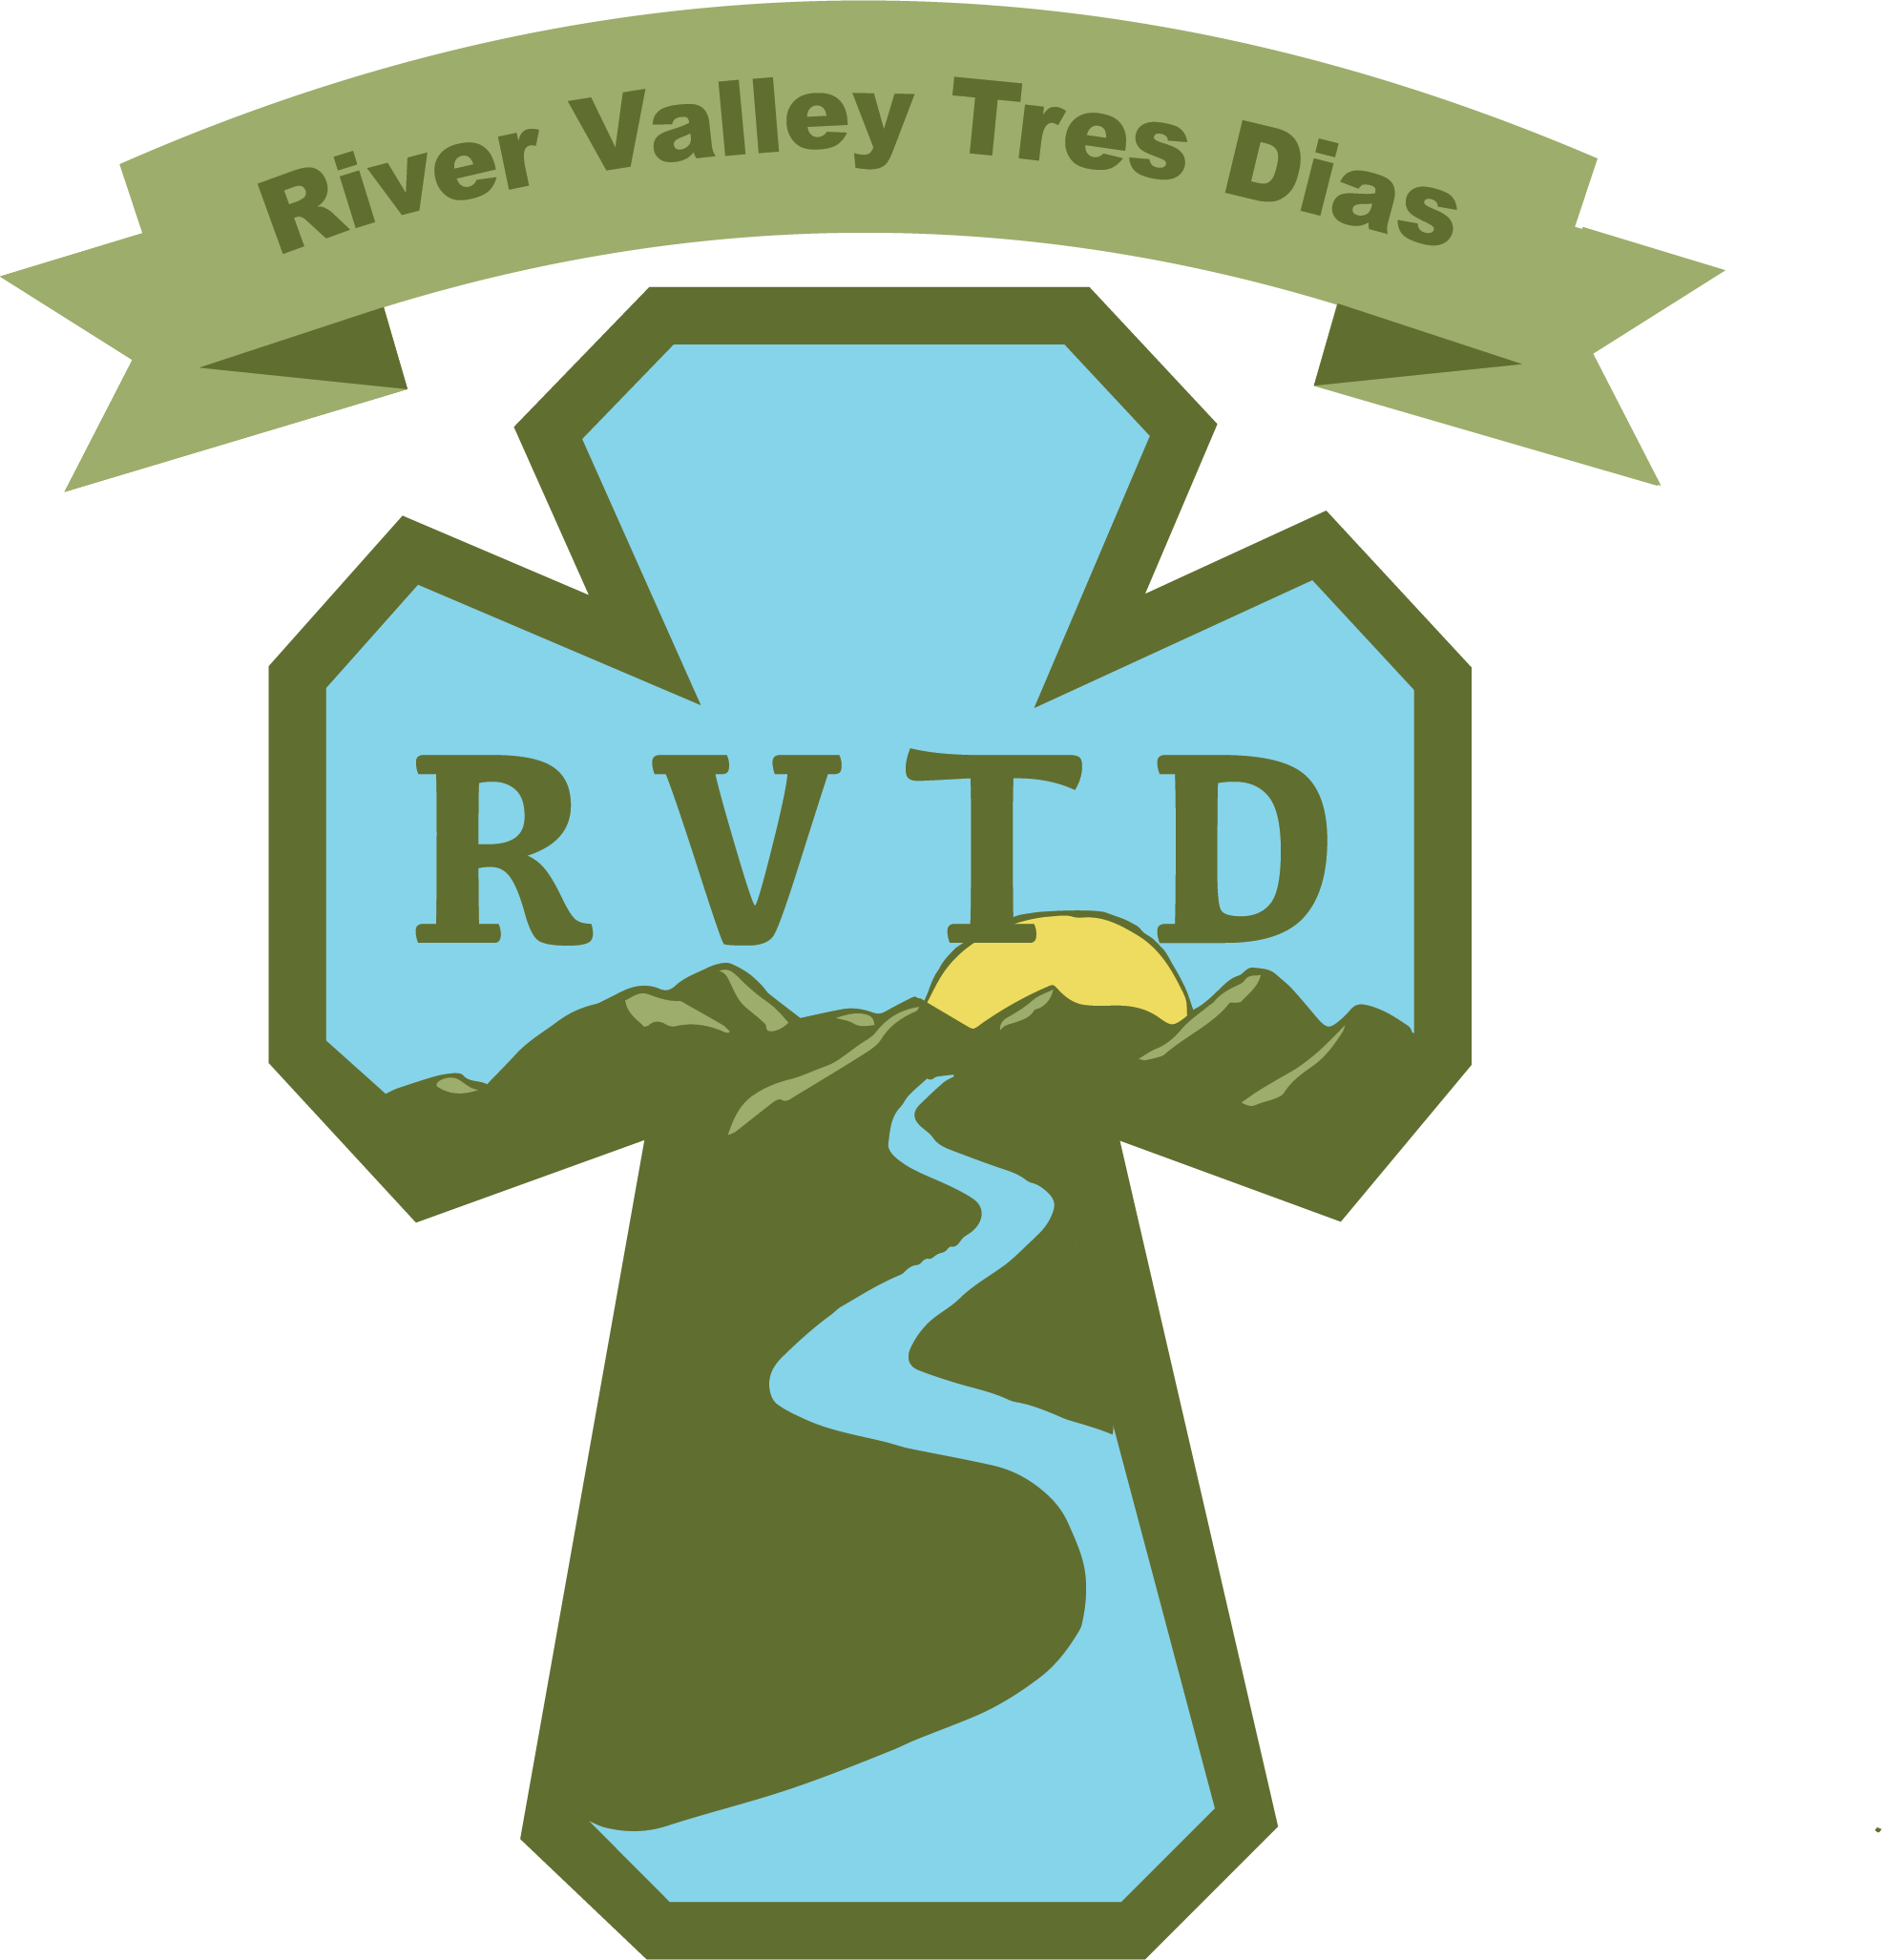 River Valley Tres Dias